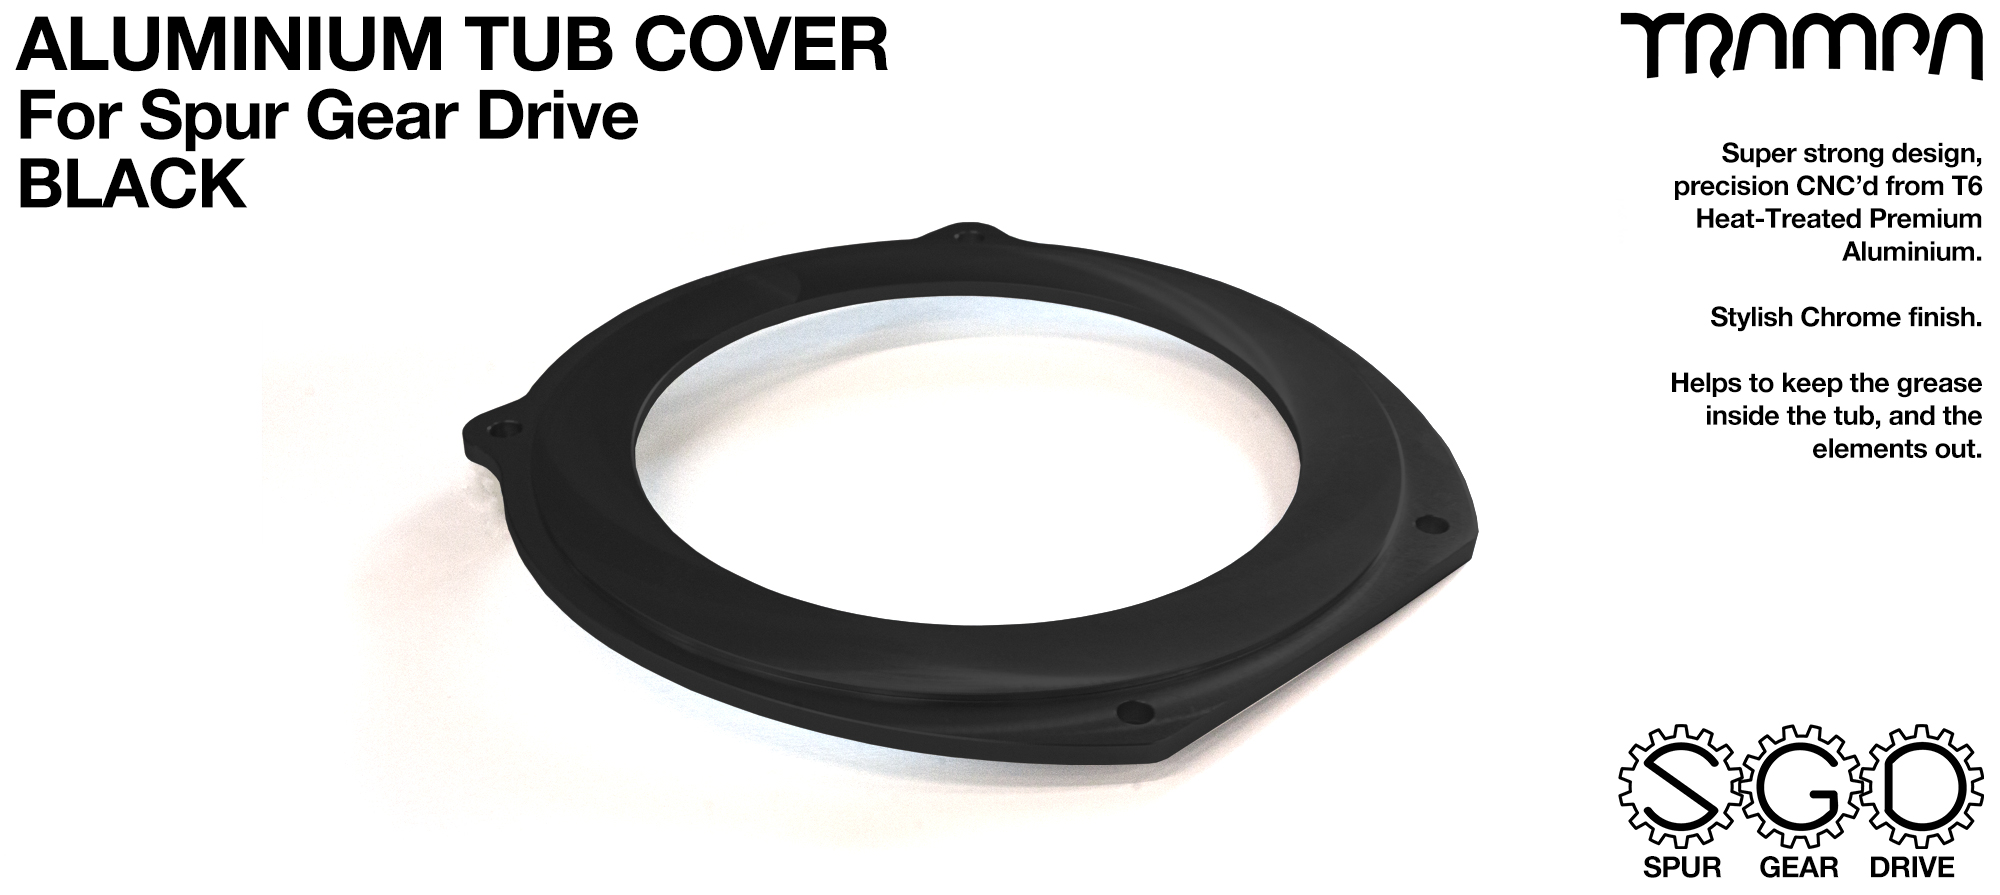 TRAMPA SPUR Gear Drive T6 Aluminium Tub Cover - BLACK